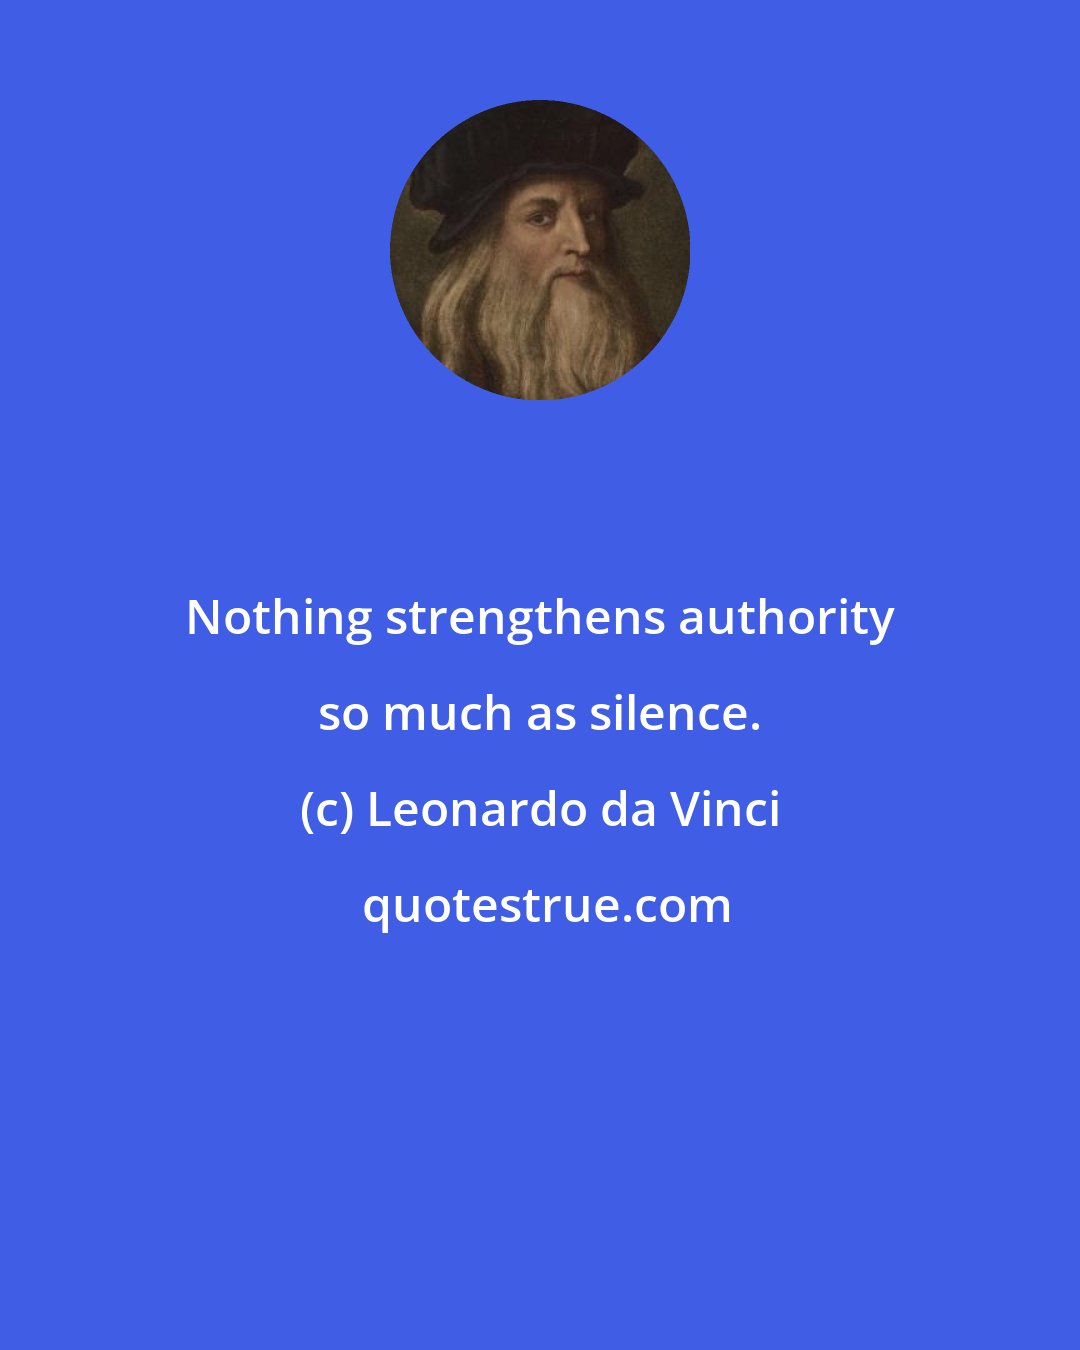 Leonardo da Vinci: Nothing strengthens authority so much as silence.